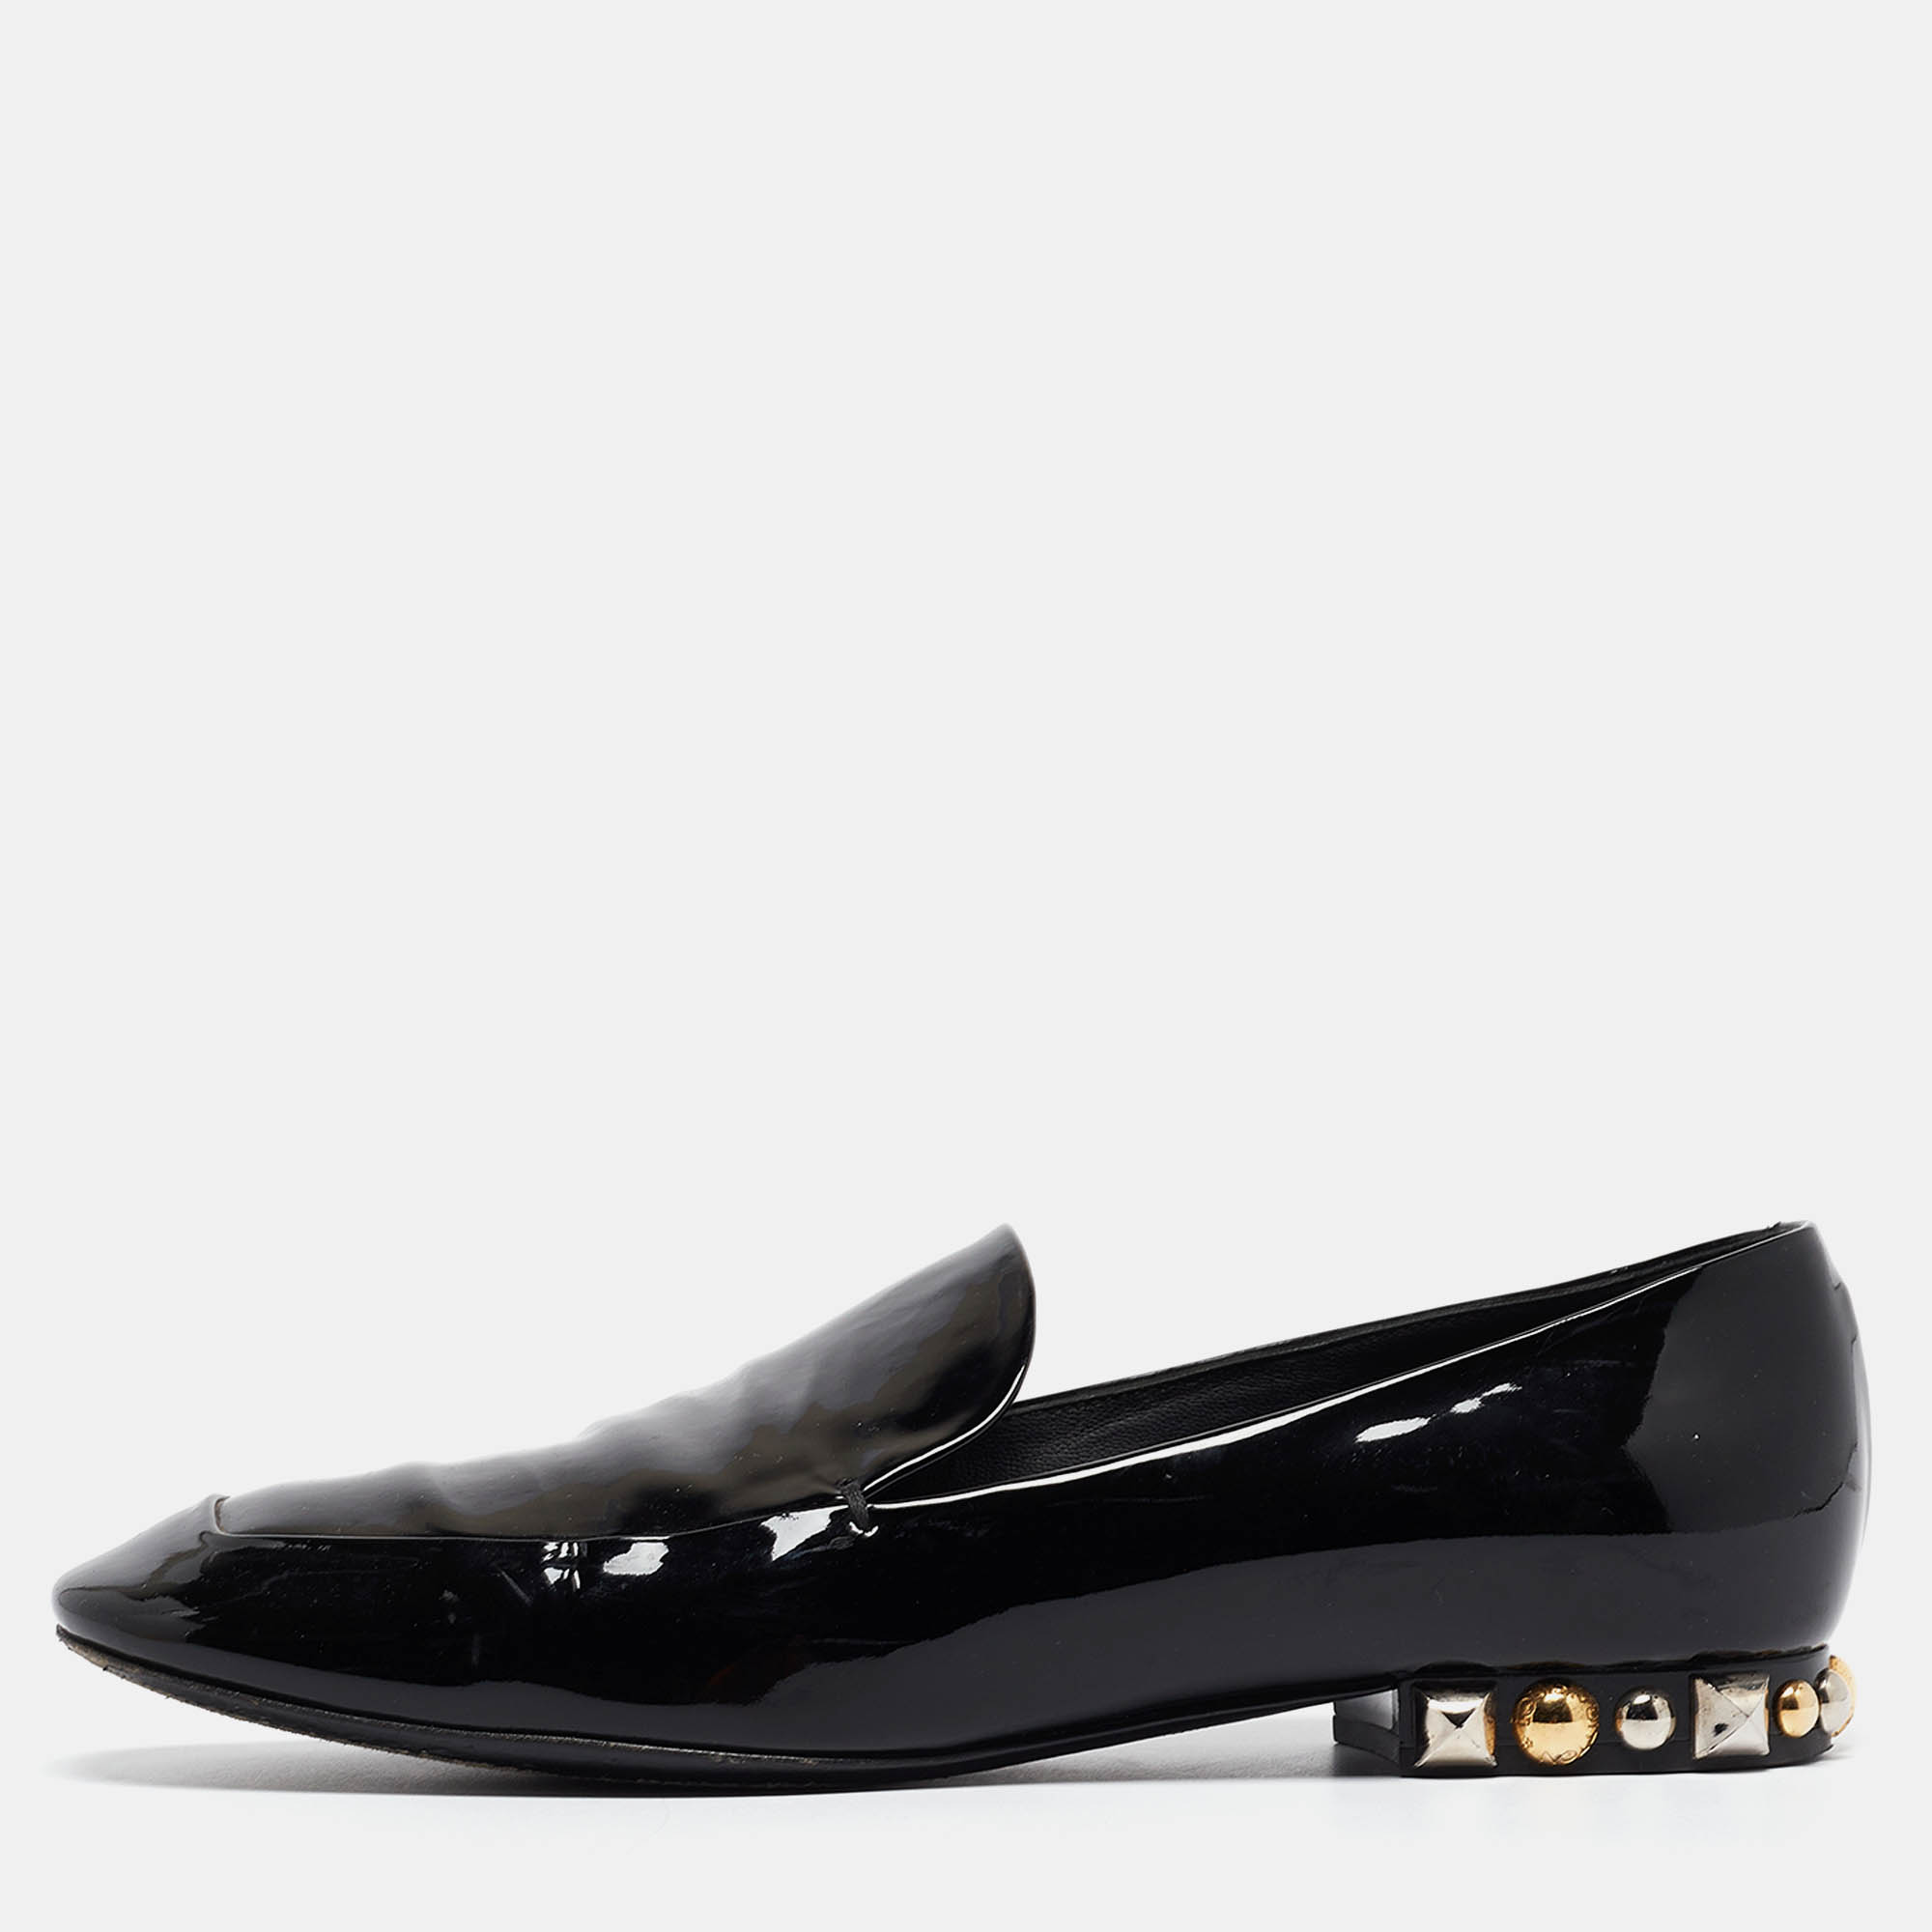 Louis vuitton black patent leather studded smoking slipper size 36.5